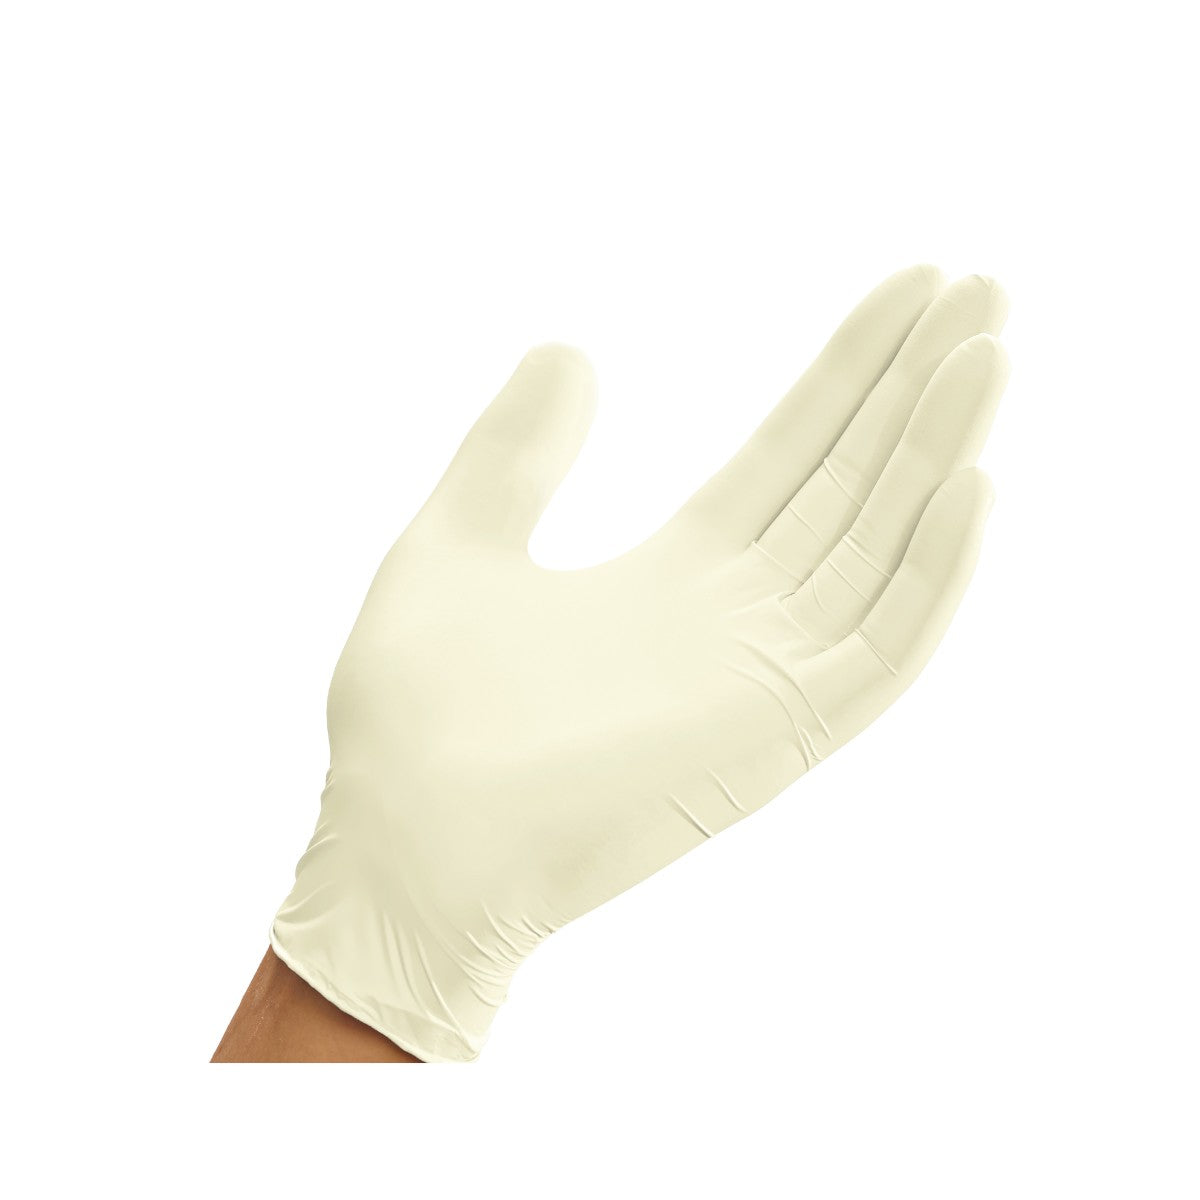 GloveOn® Innova Latex Gloves INV211 (Carton of 10 Boxes)